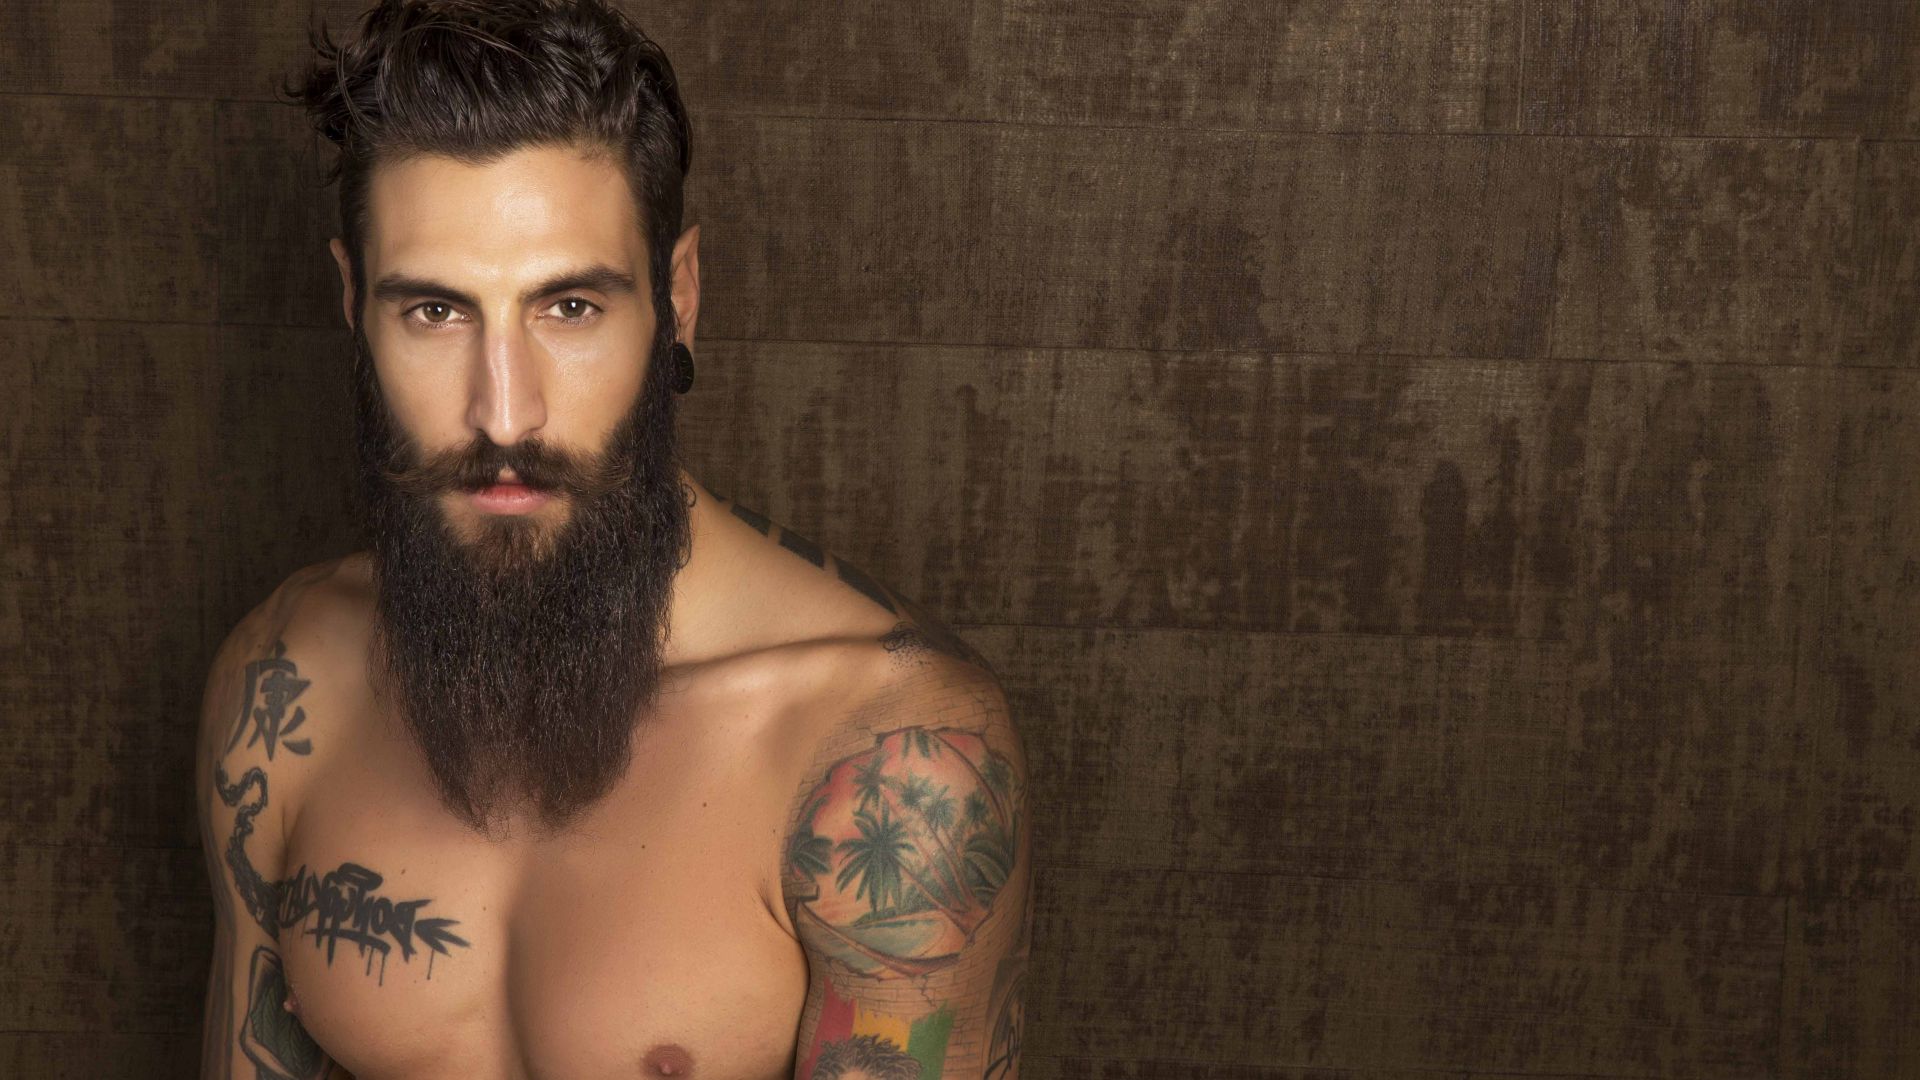 Matteo Marinelli, Top Fashion Male Models, model, tatoo (horizontal)